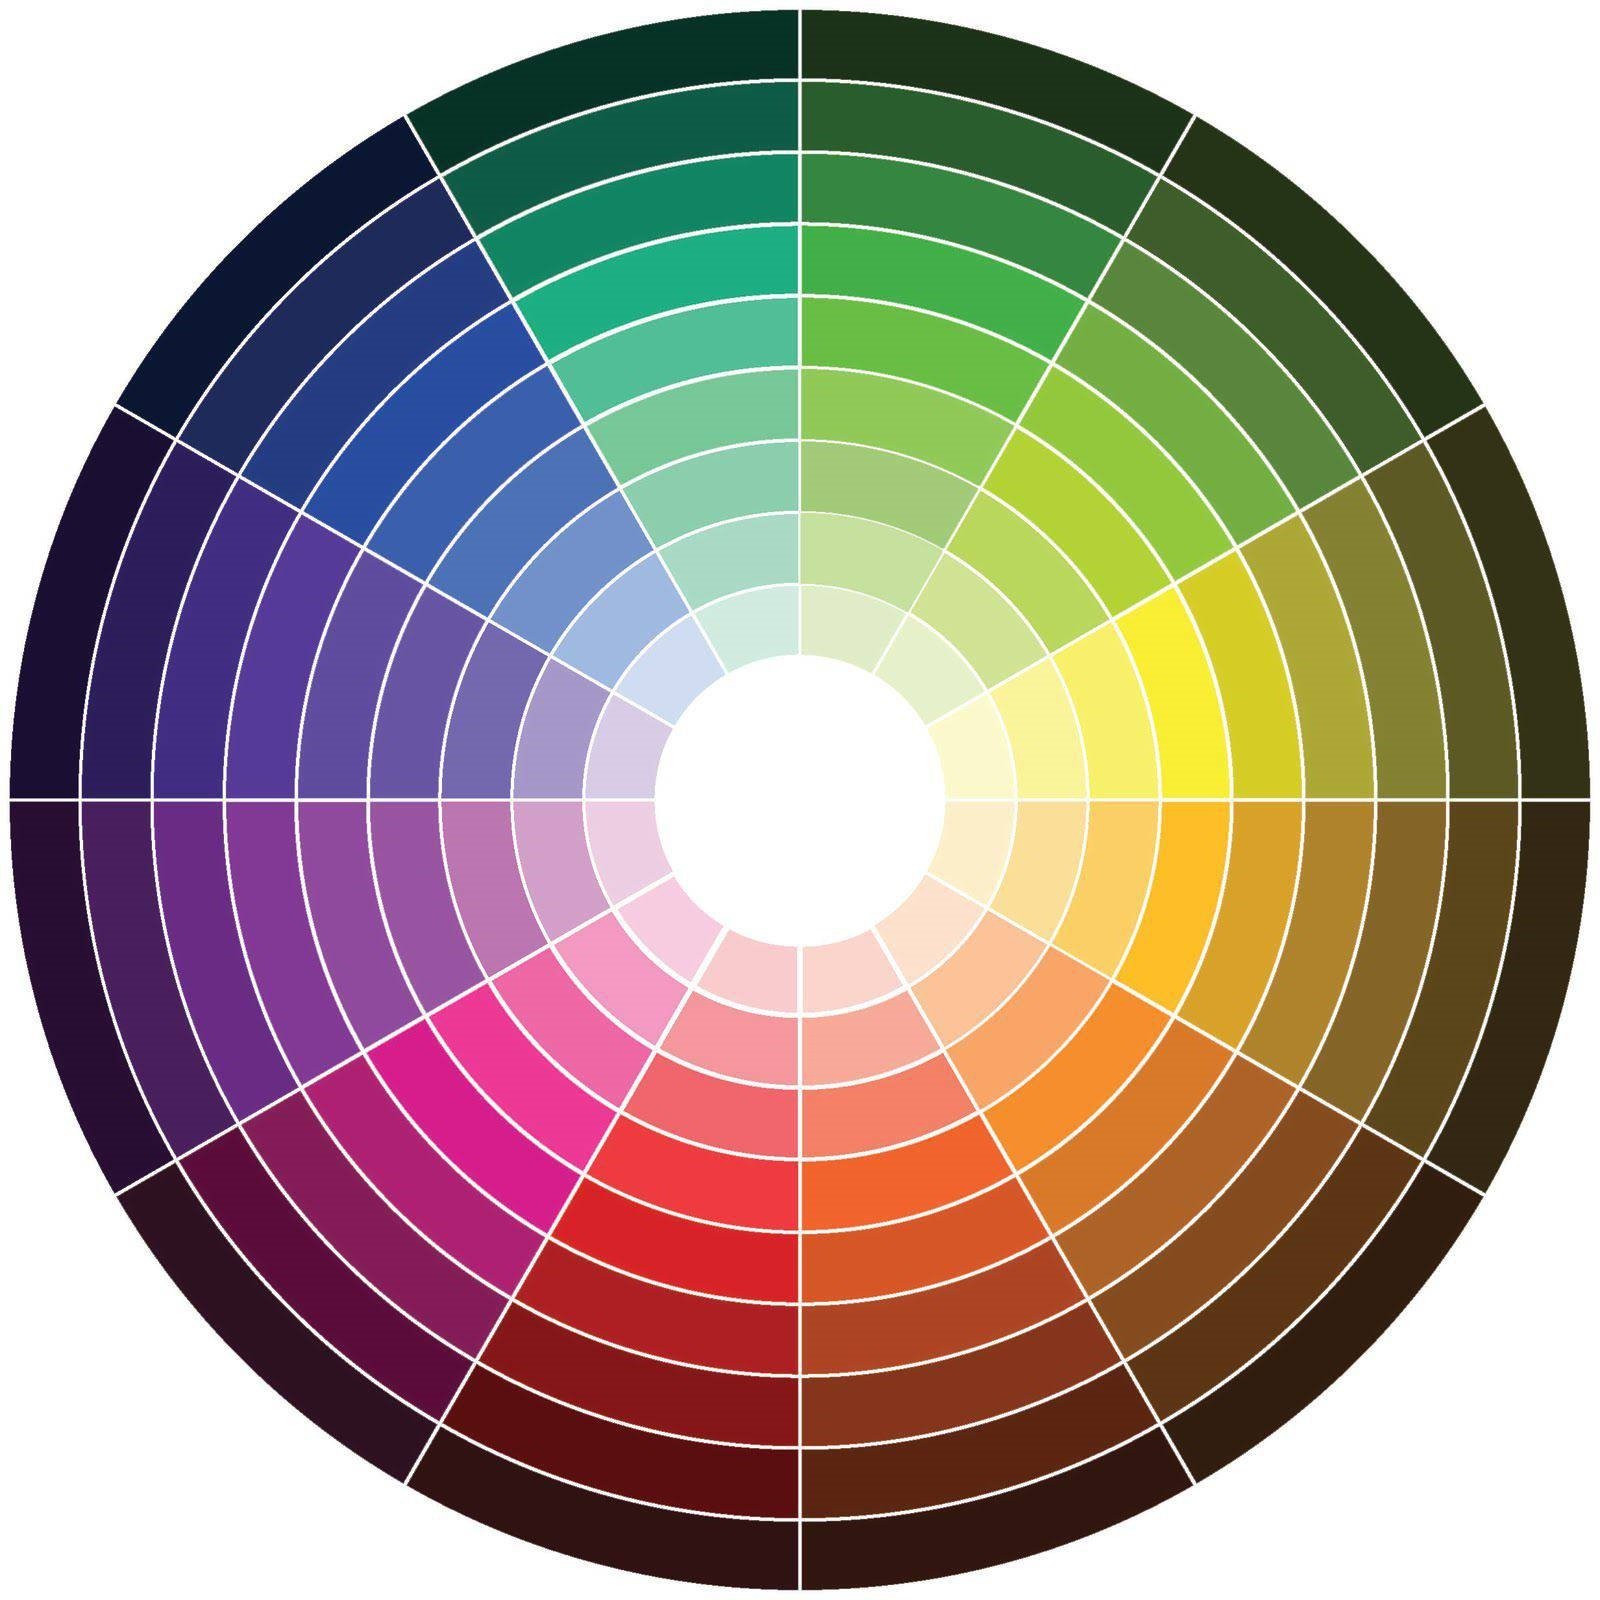 Световая палитра. Цветовой круг Иттена Гете Освальда. Цветовой круг Иттена 12 цветов. Цветовой круг Вильгельма Освальда. Спектр круг Иттена.